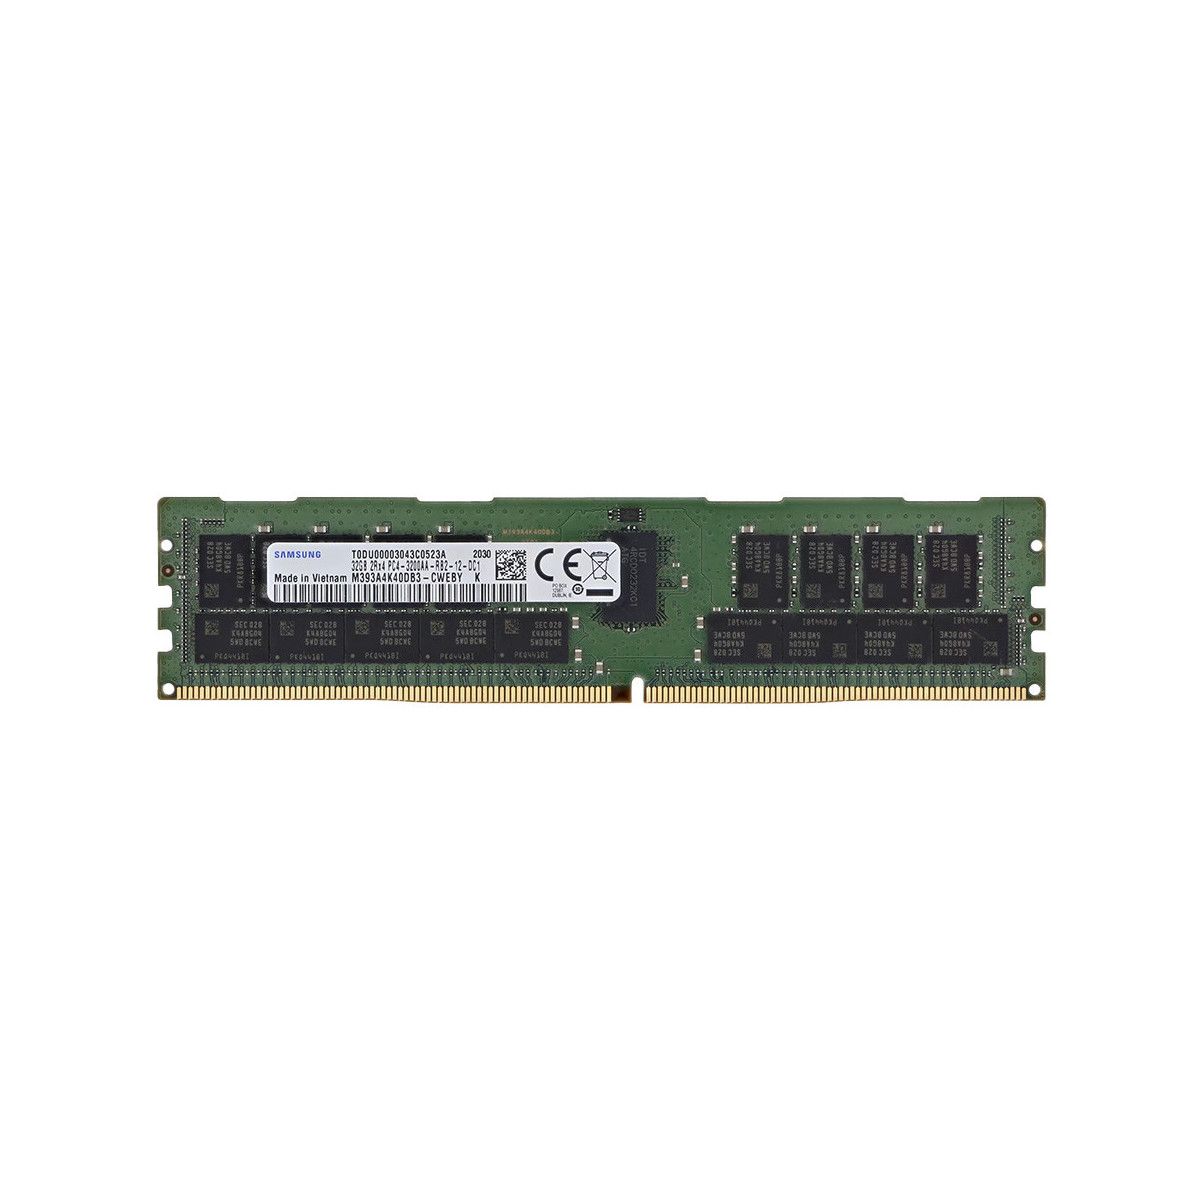 AB663423-MS - Memstar 1x 32GB DDR4-3200 RDIMM PC4-25600R - Mem-Star Kompatybilna pamięć OEM 1 - Memstar 